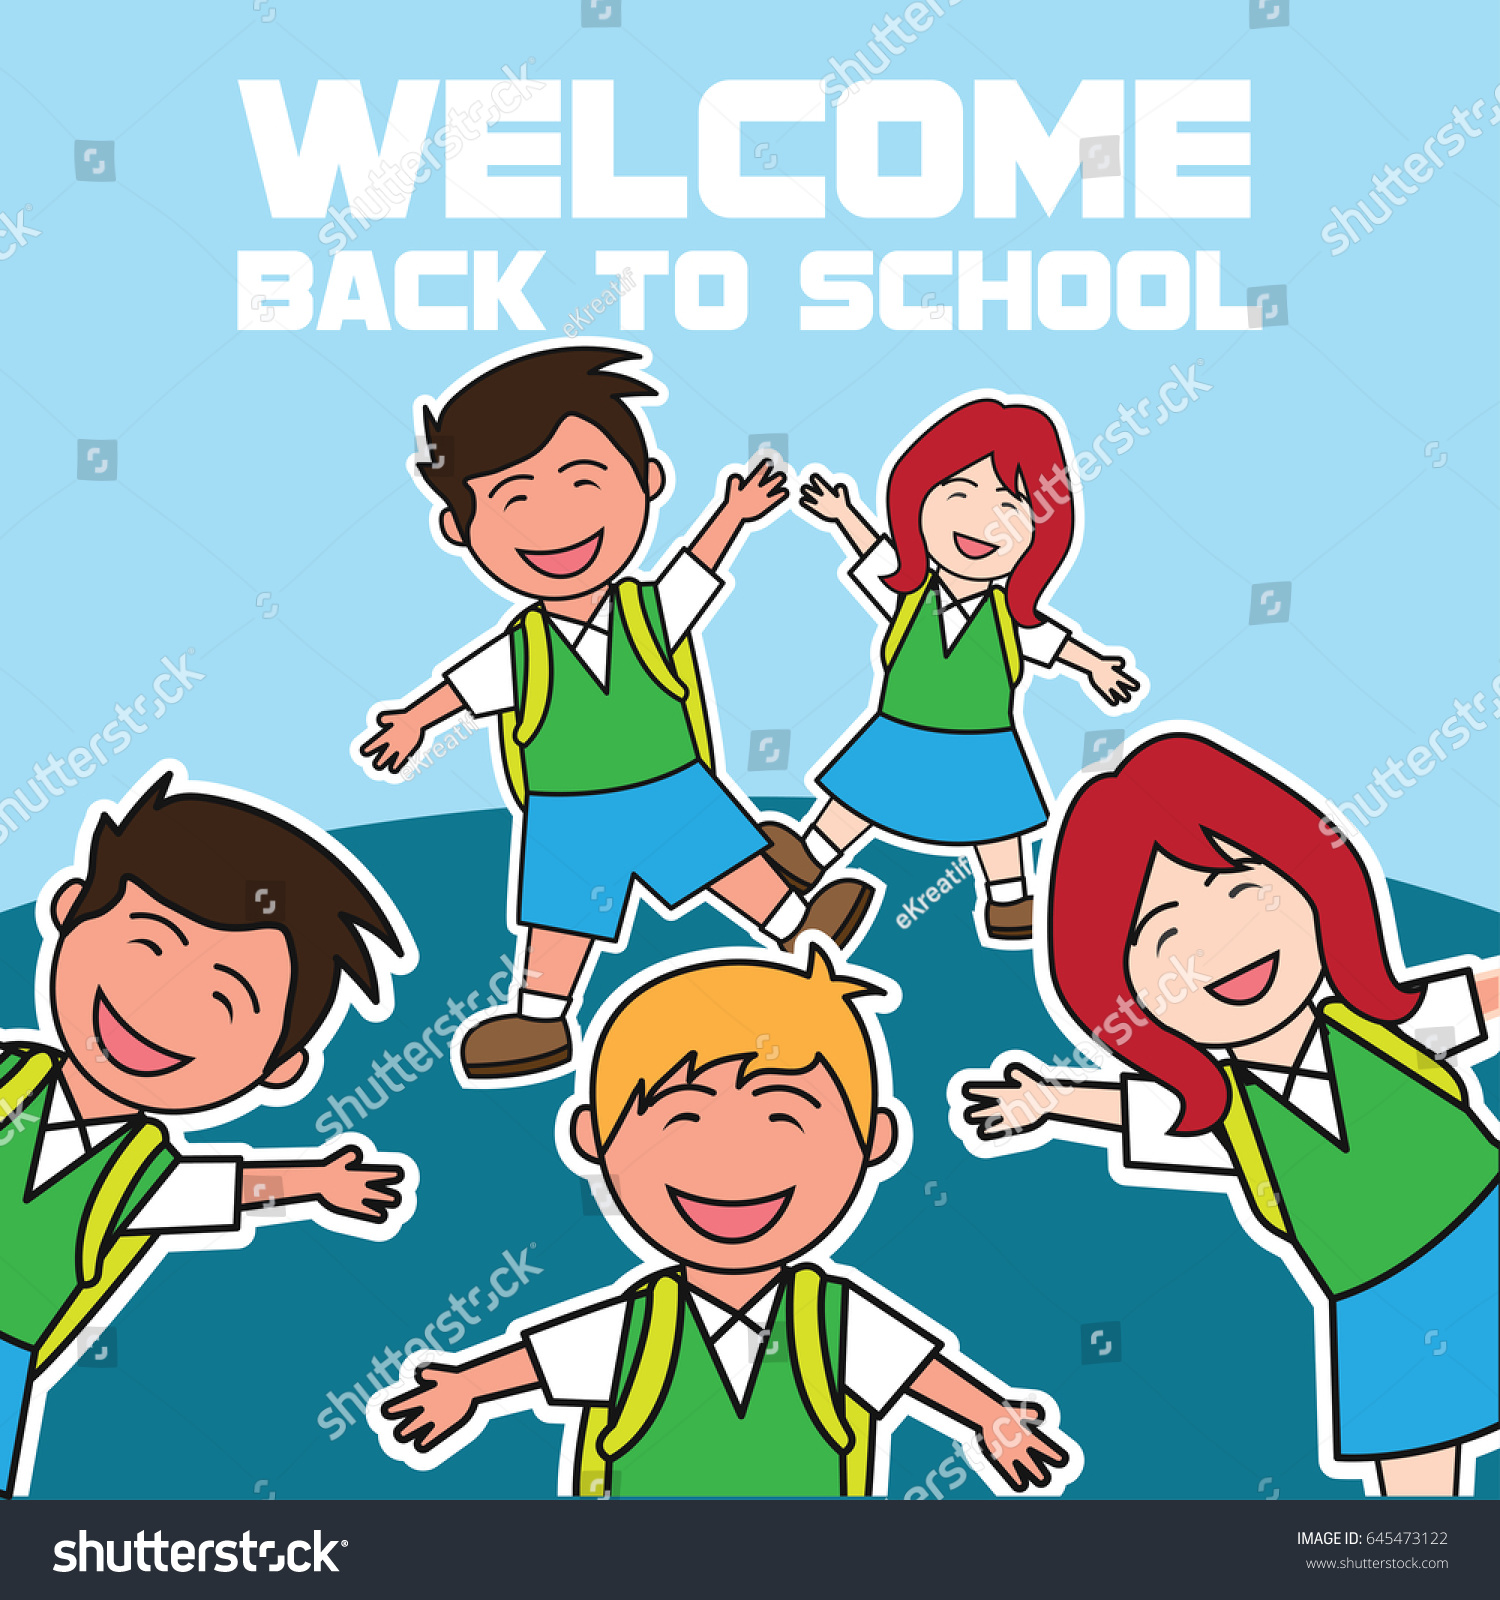 Welcome Back School Cartoon Concept Vector Stock Vector Royalty Free